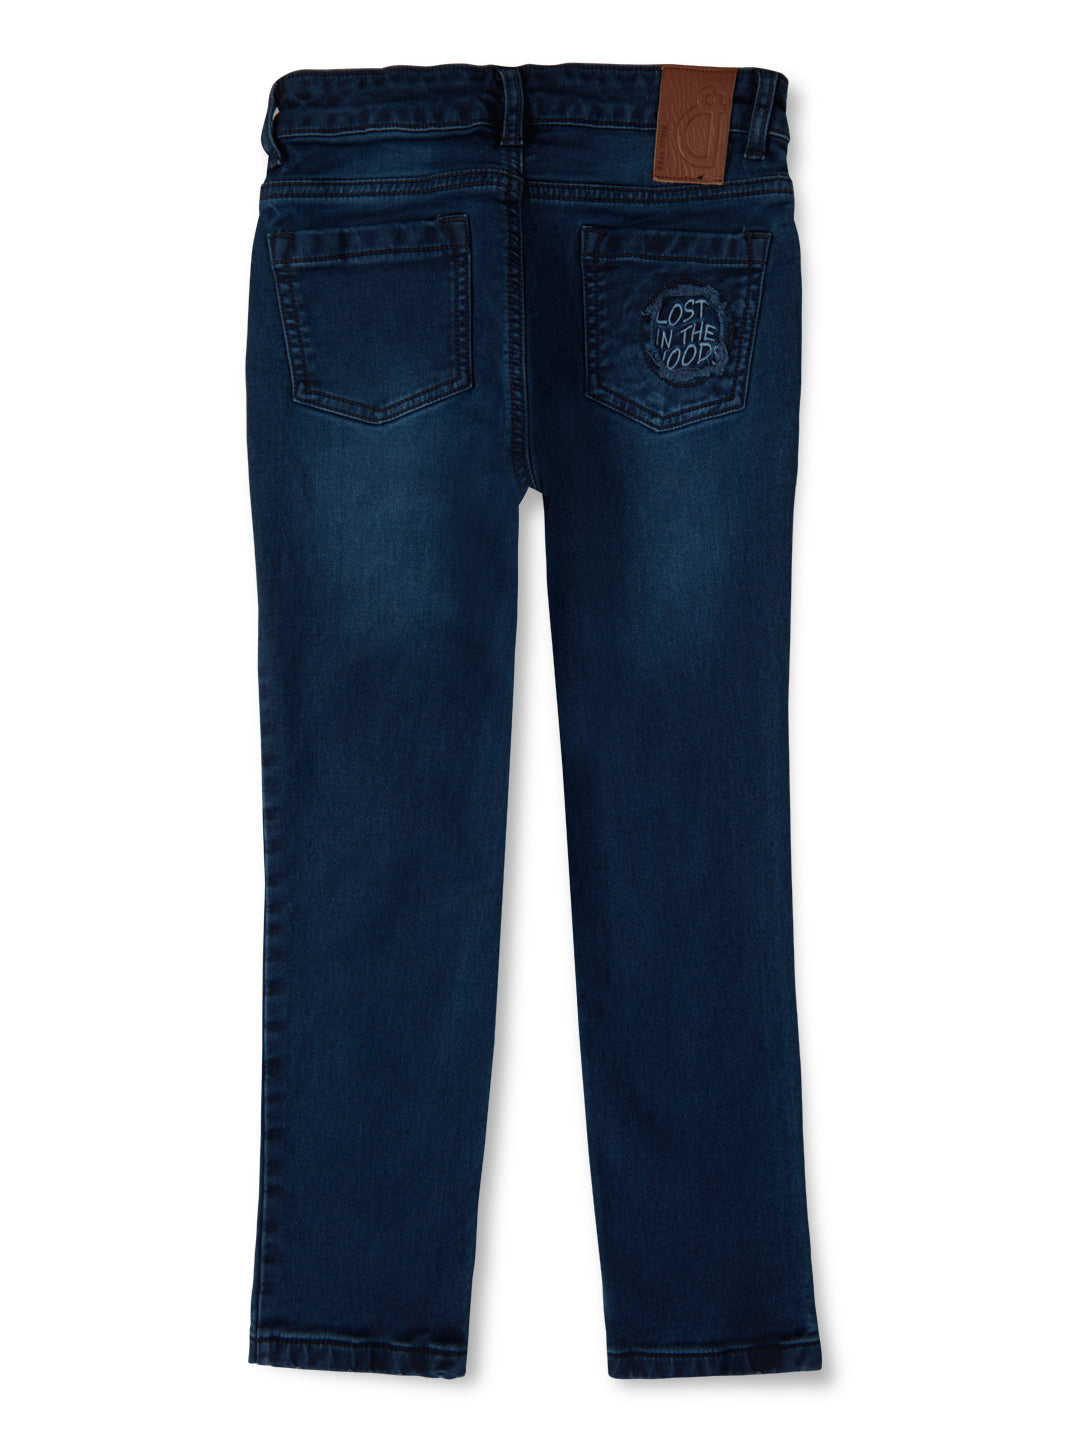 Boys Blue Solid Denim Jeans Fixed Waist